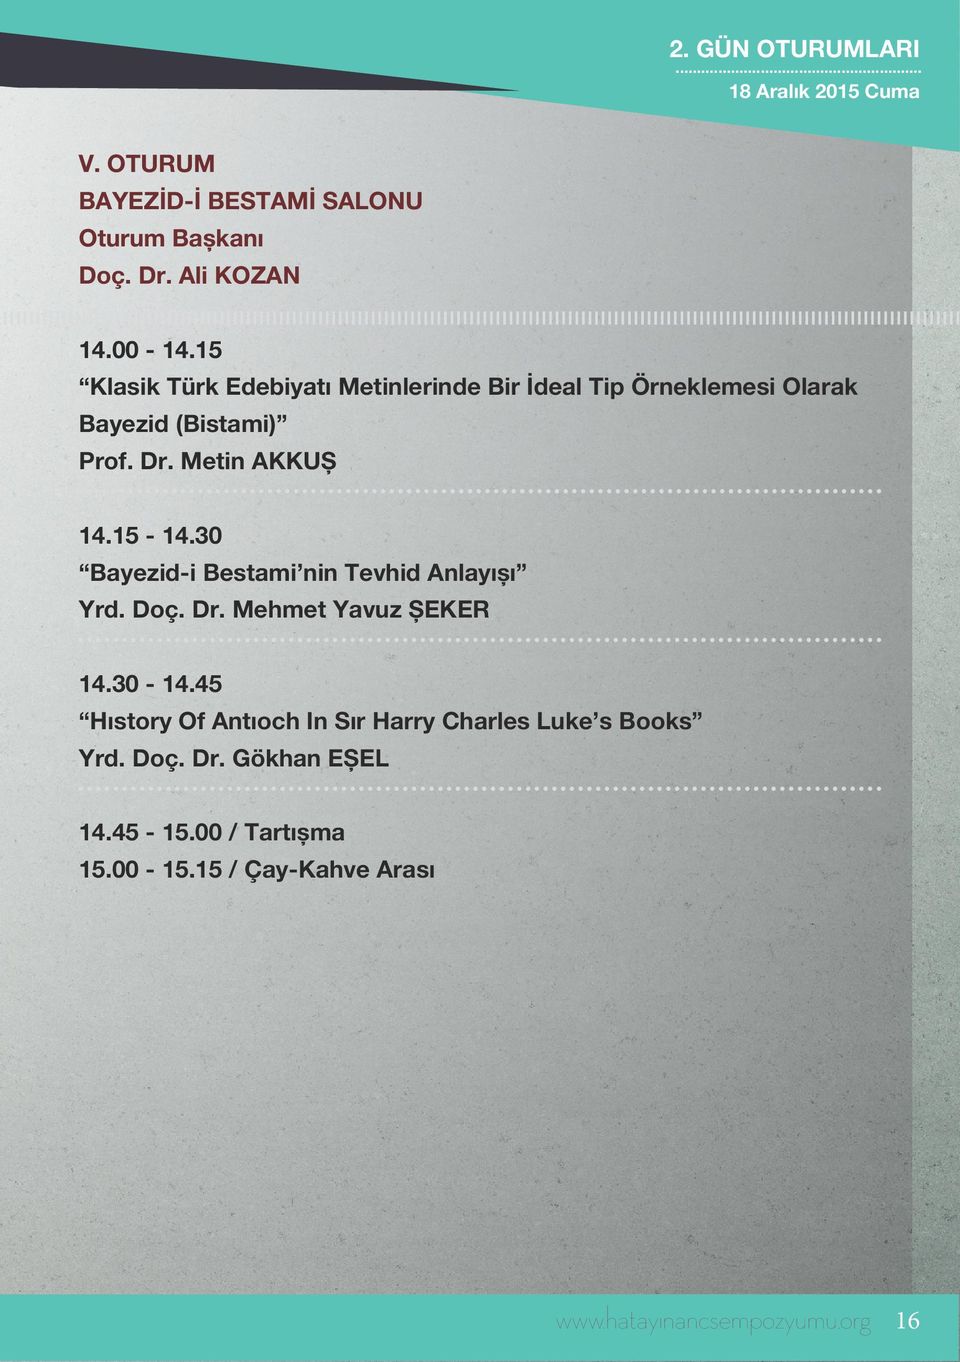 Metin AKKUŞ 14.15-14.30 Bayezid-i Bestami nin Tevhid Anlayışı Yrd. Doç. Dr. Mehmet Yavuz ŞEKER 14.30-14.